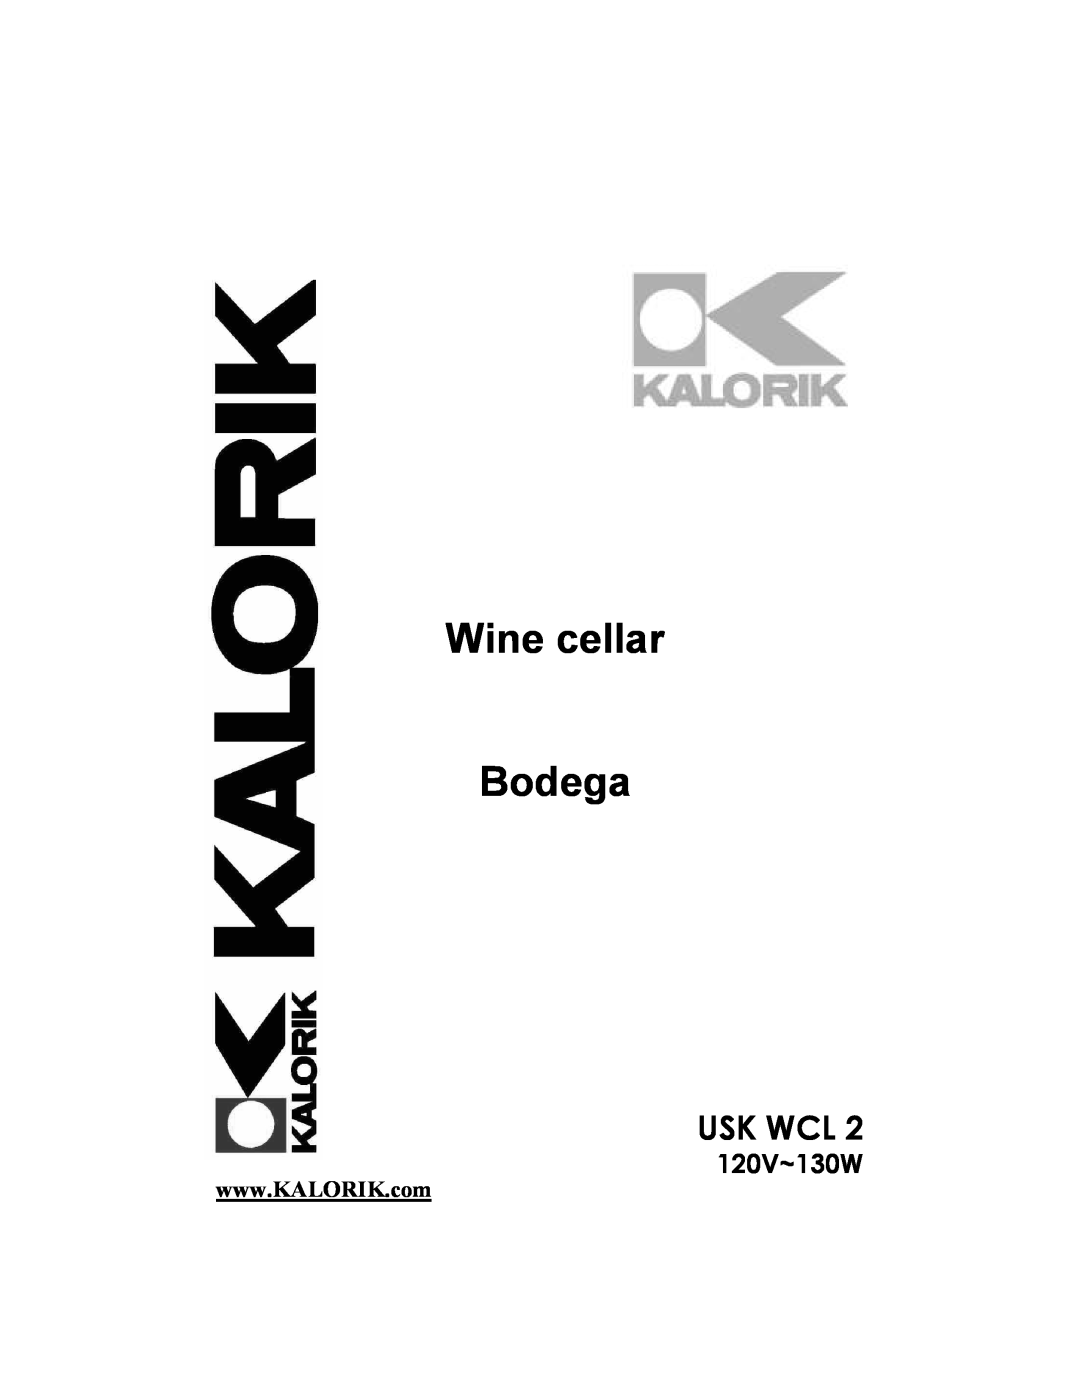 Kalorik USK WCL 2 manual 120V~130W, Wine cellar Bodega, Usk Wcl 